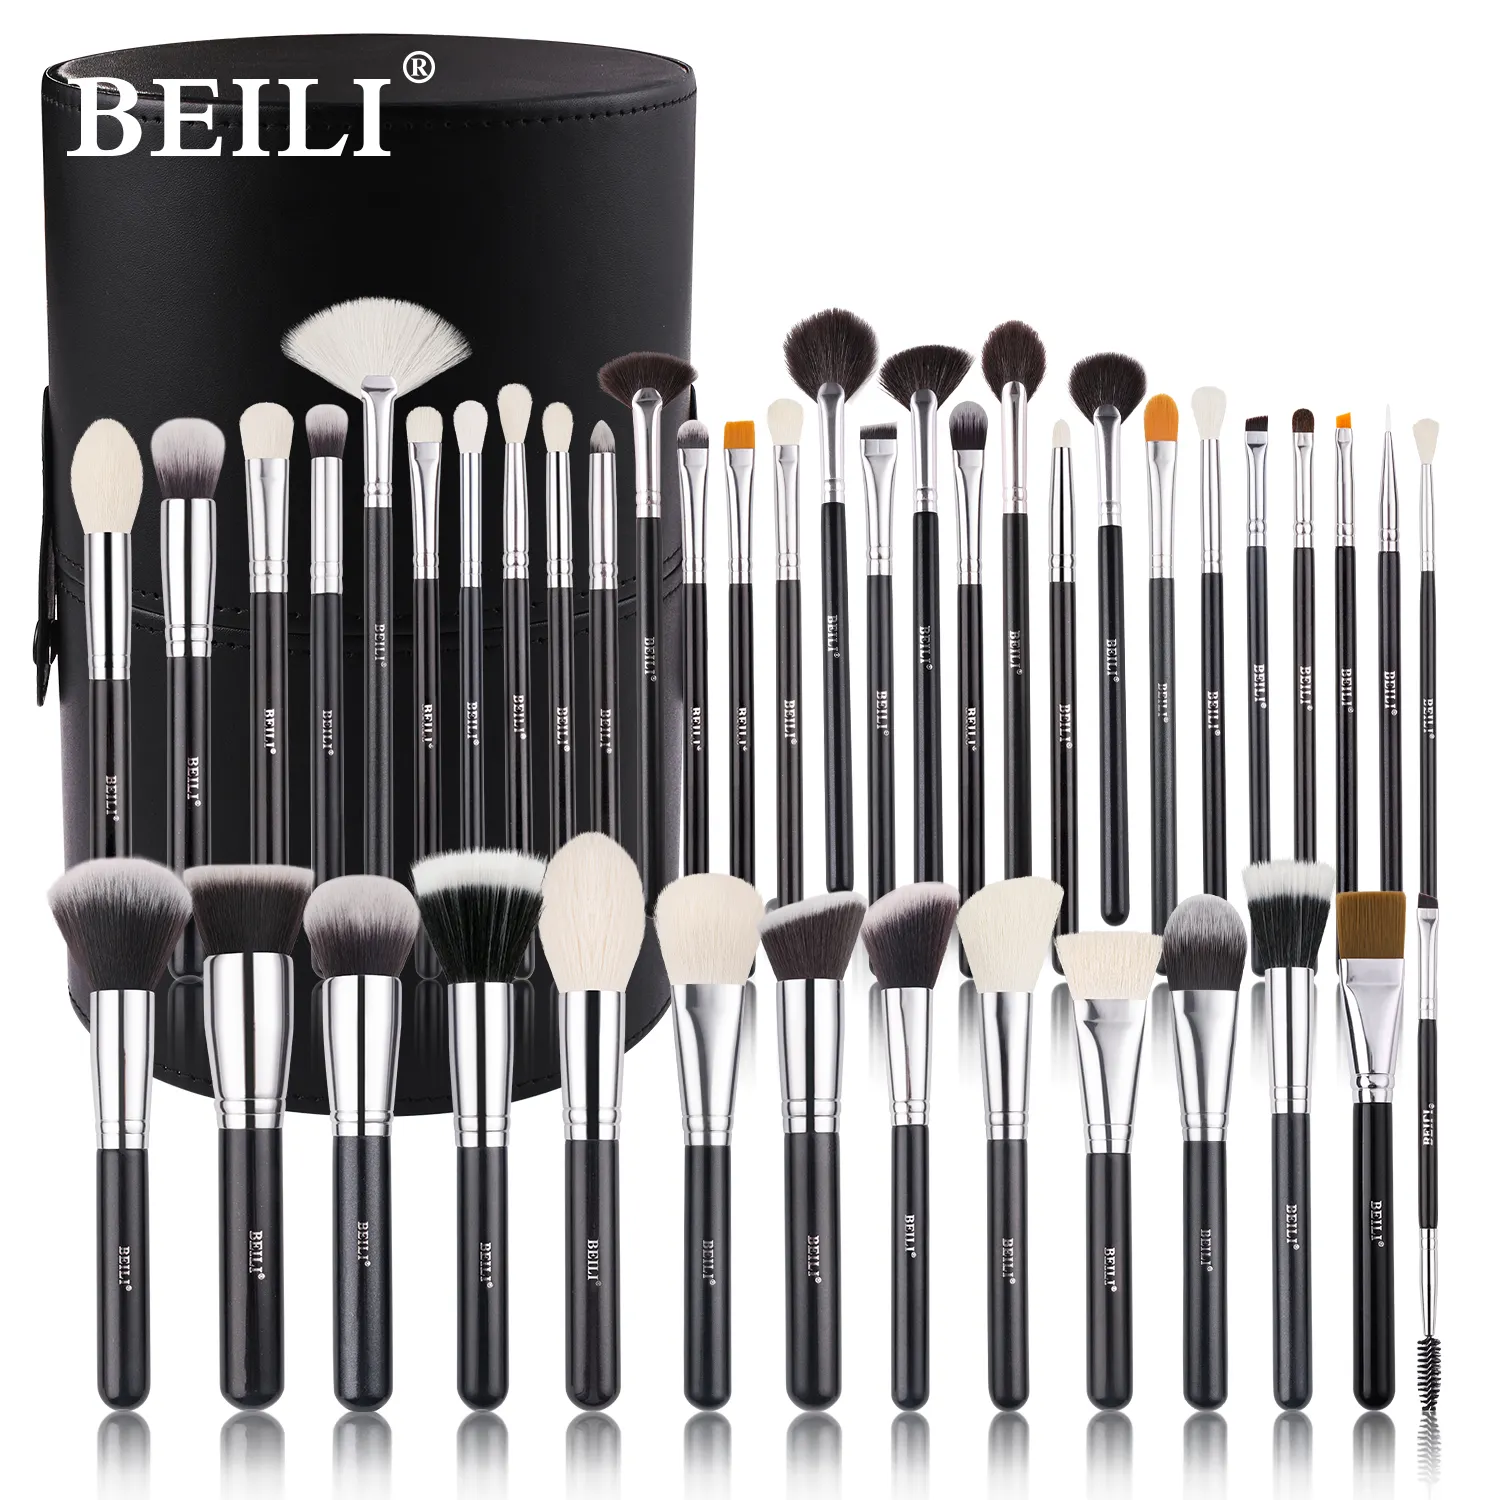 BEILI Private Label Makeup Brushes Black Wooden Handle Goat Hair Foundation Eyeshadow Brush for Professional Make-up Artis